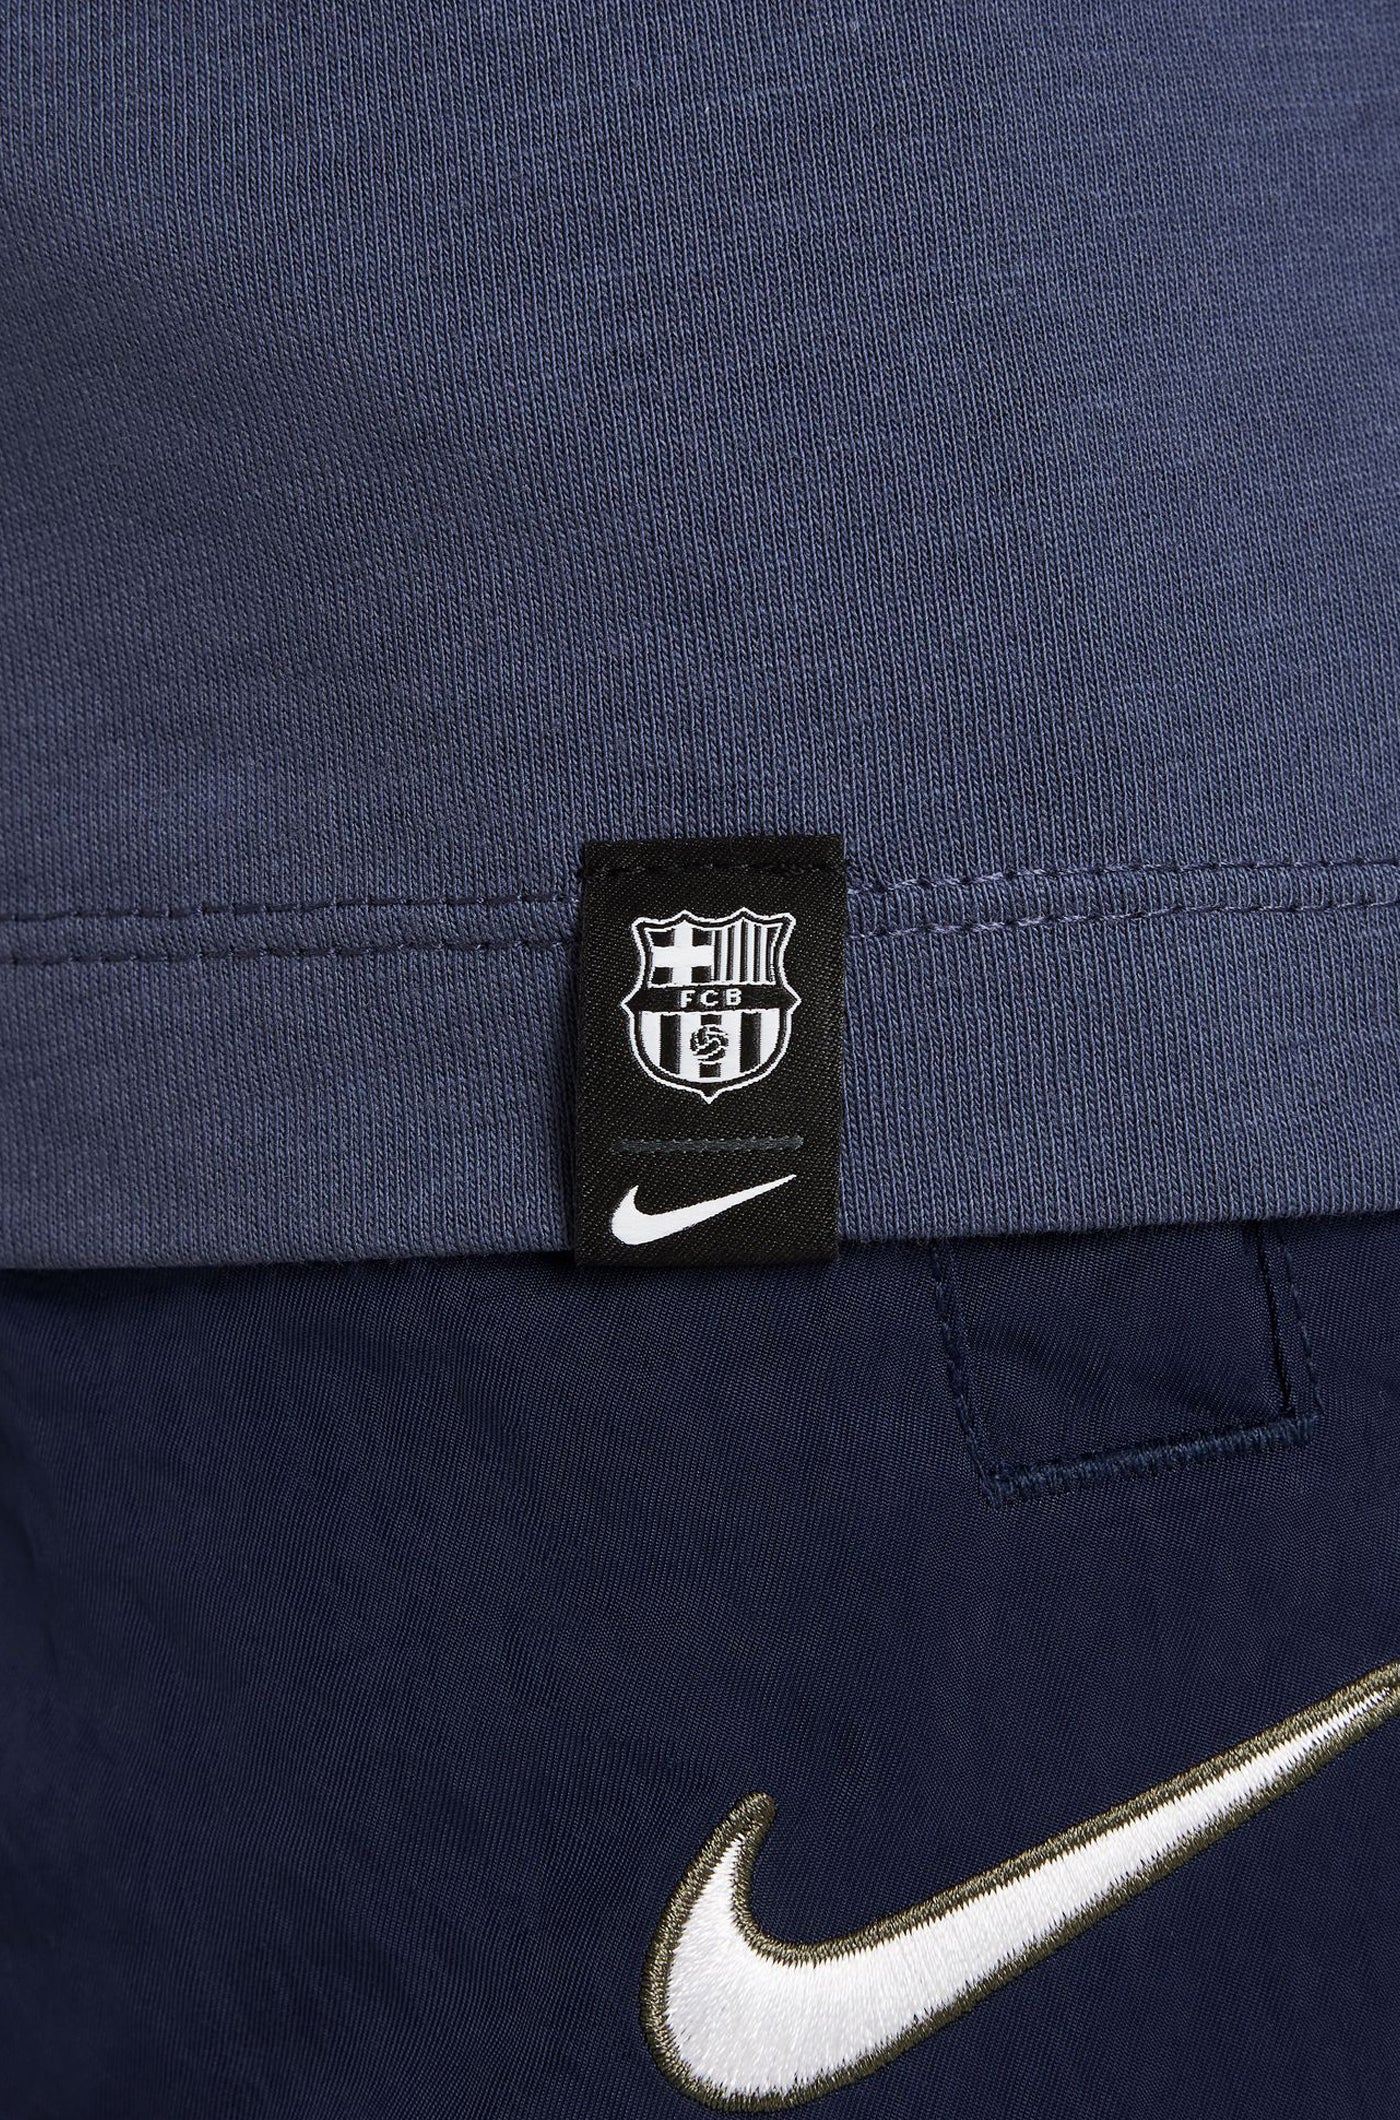 Camiseta azul Barça Nike - Junior